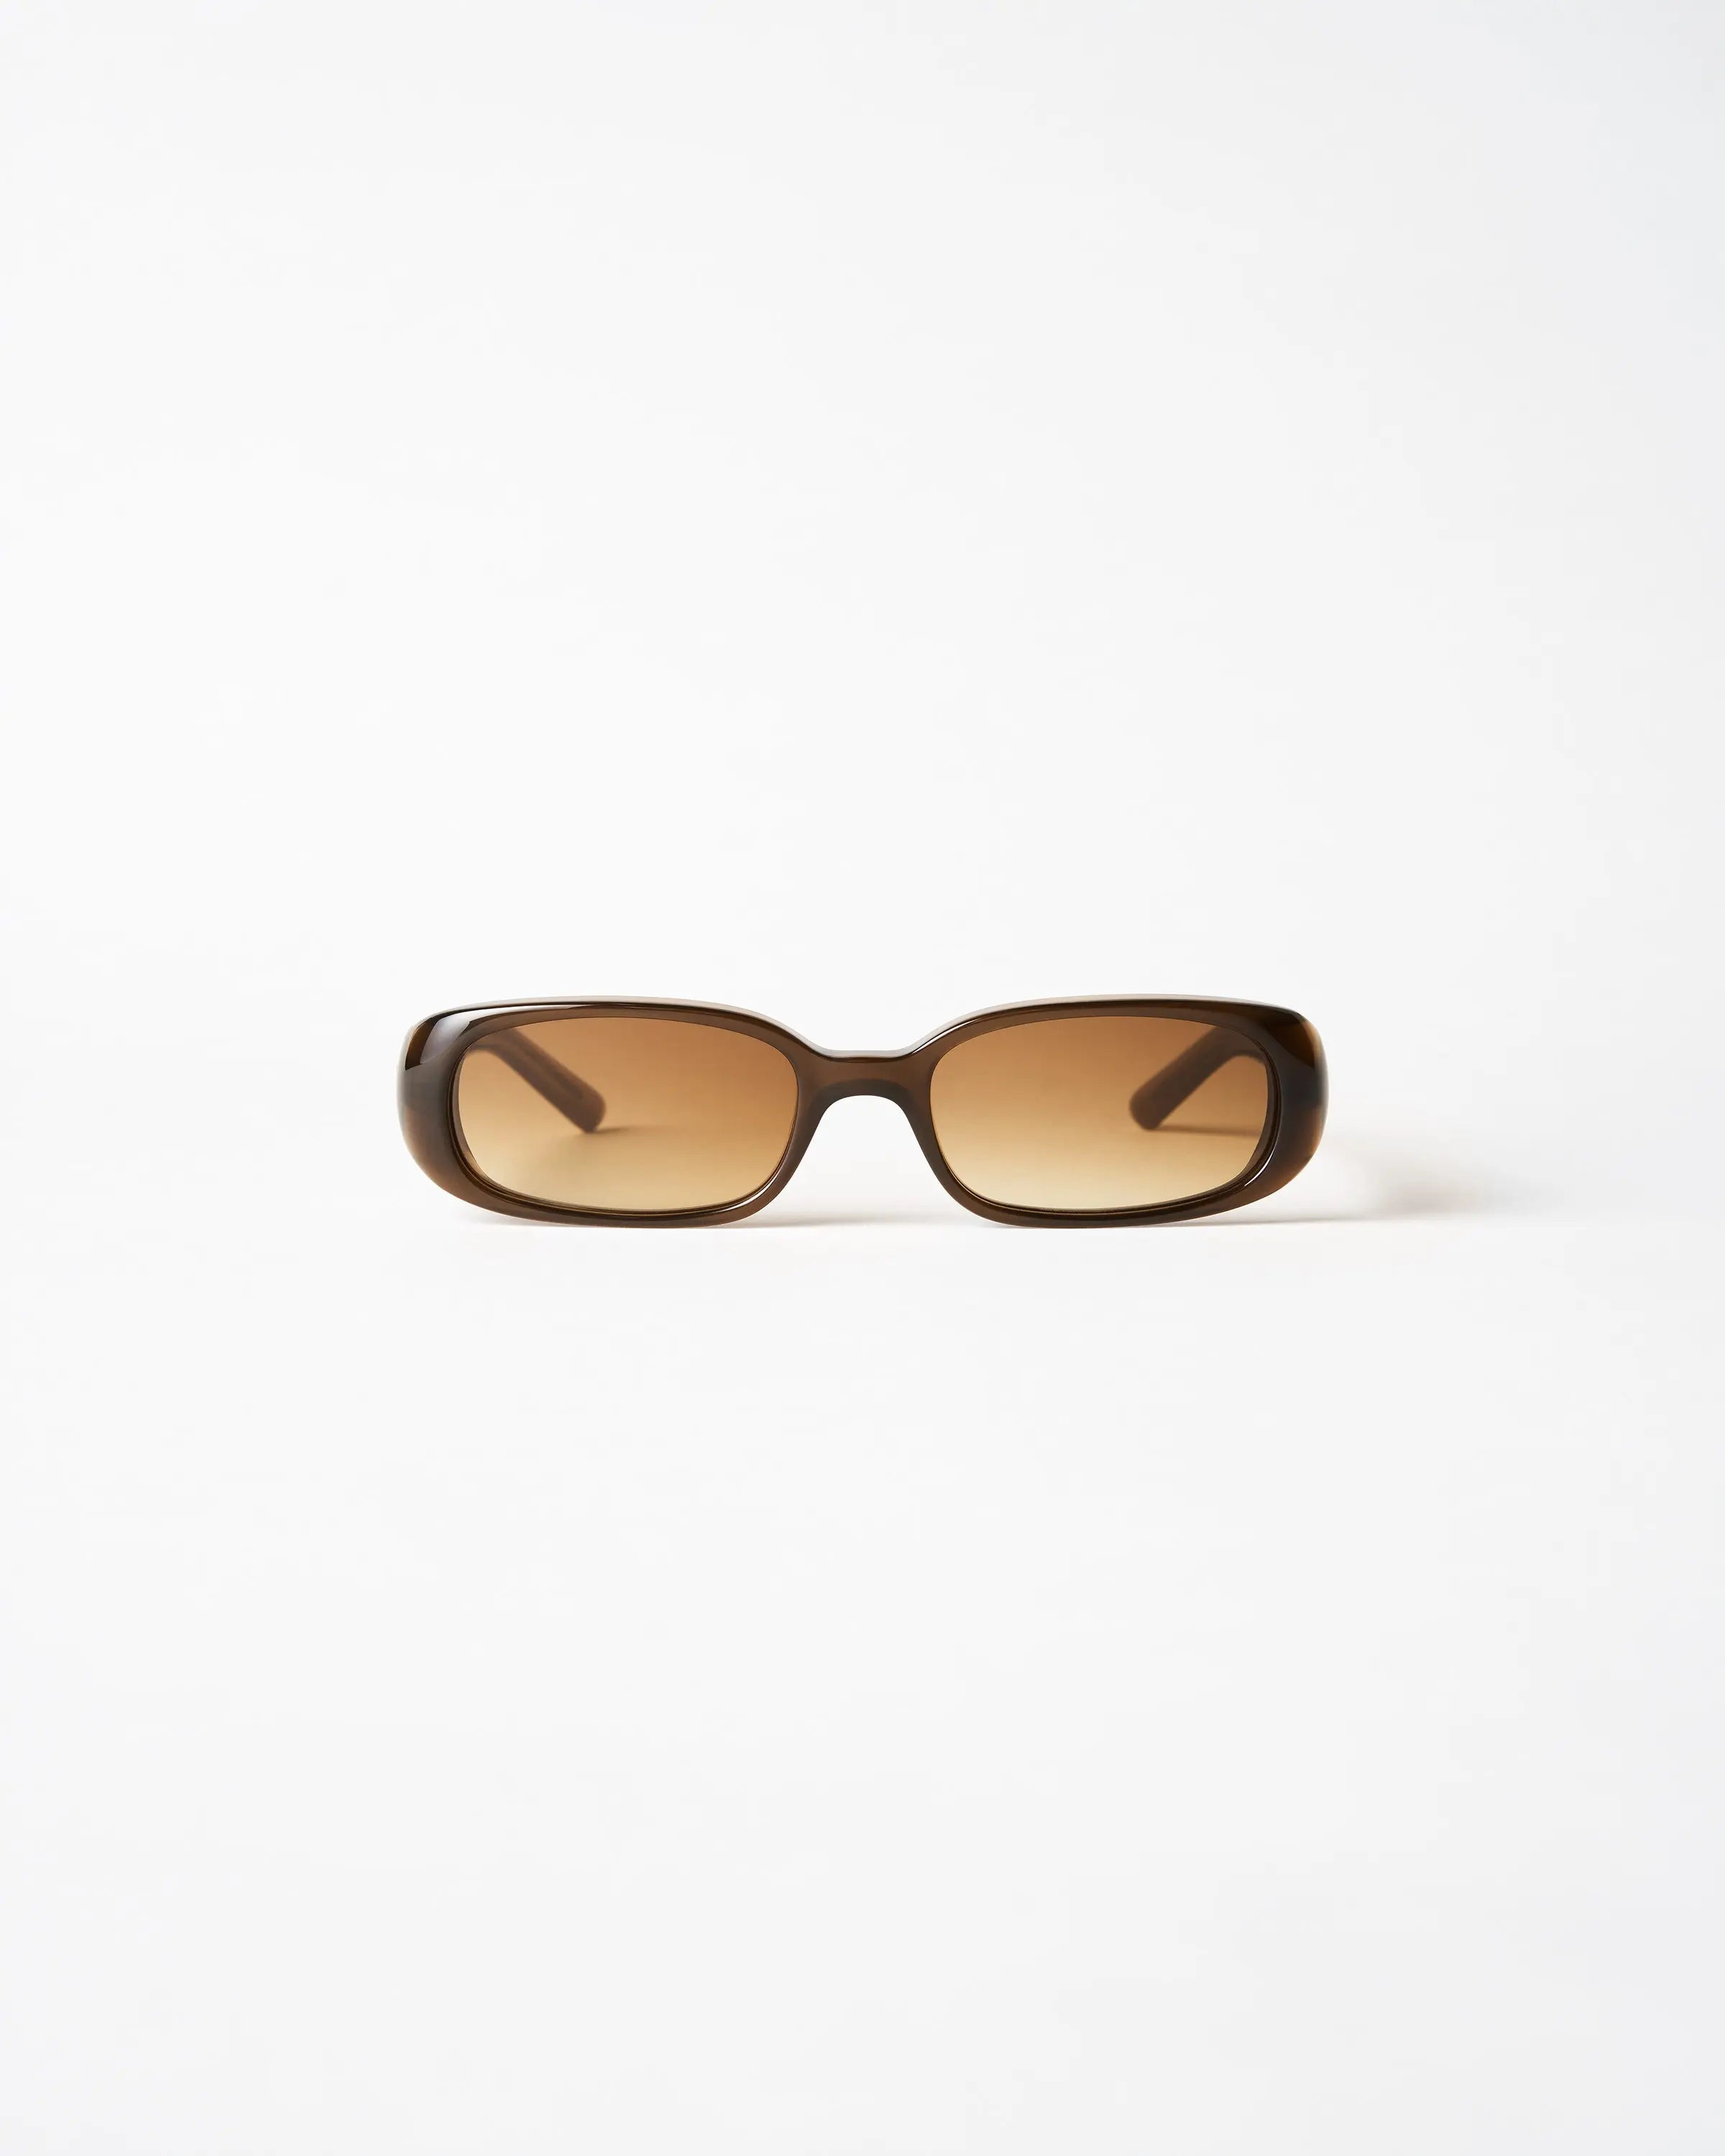 CHIMI LHR Brown Sunglasses